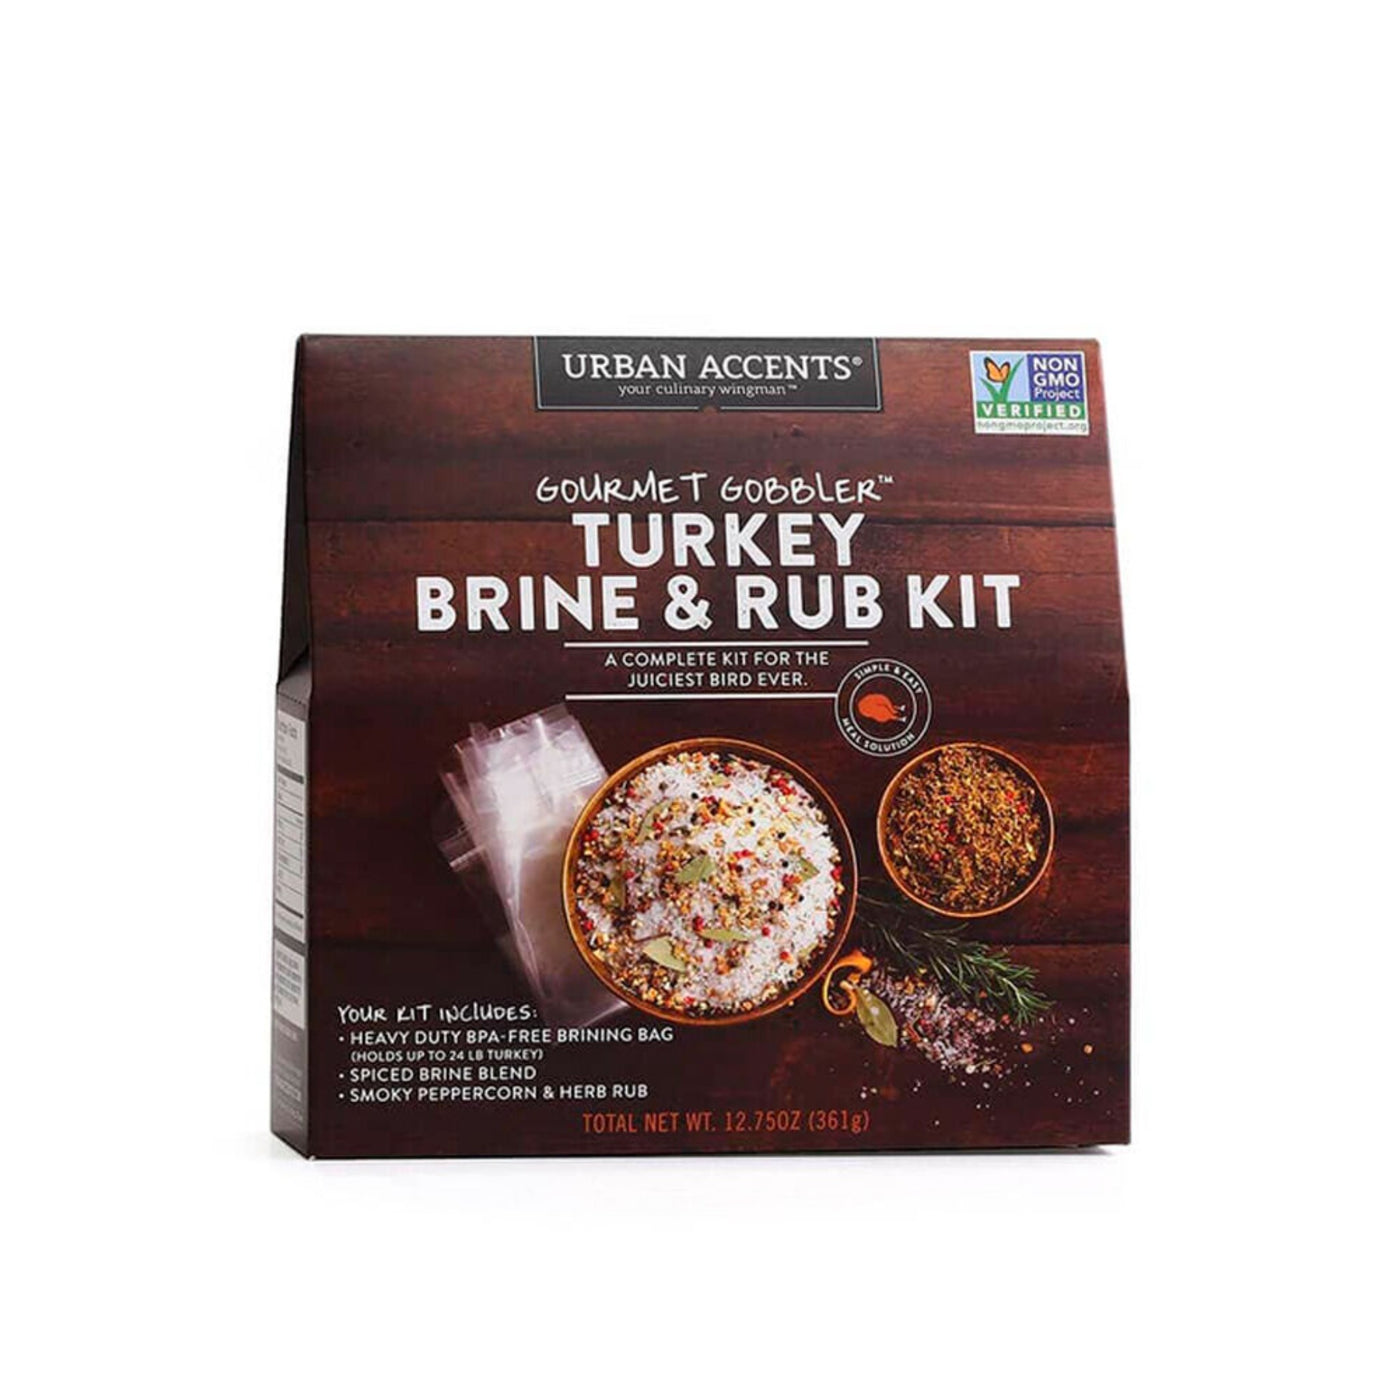 Gourmet Gobbler Turkey Brine & Rub Kit